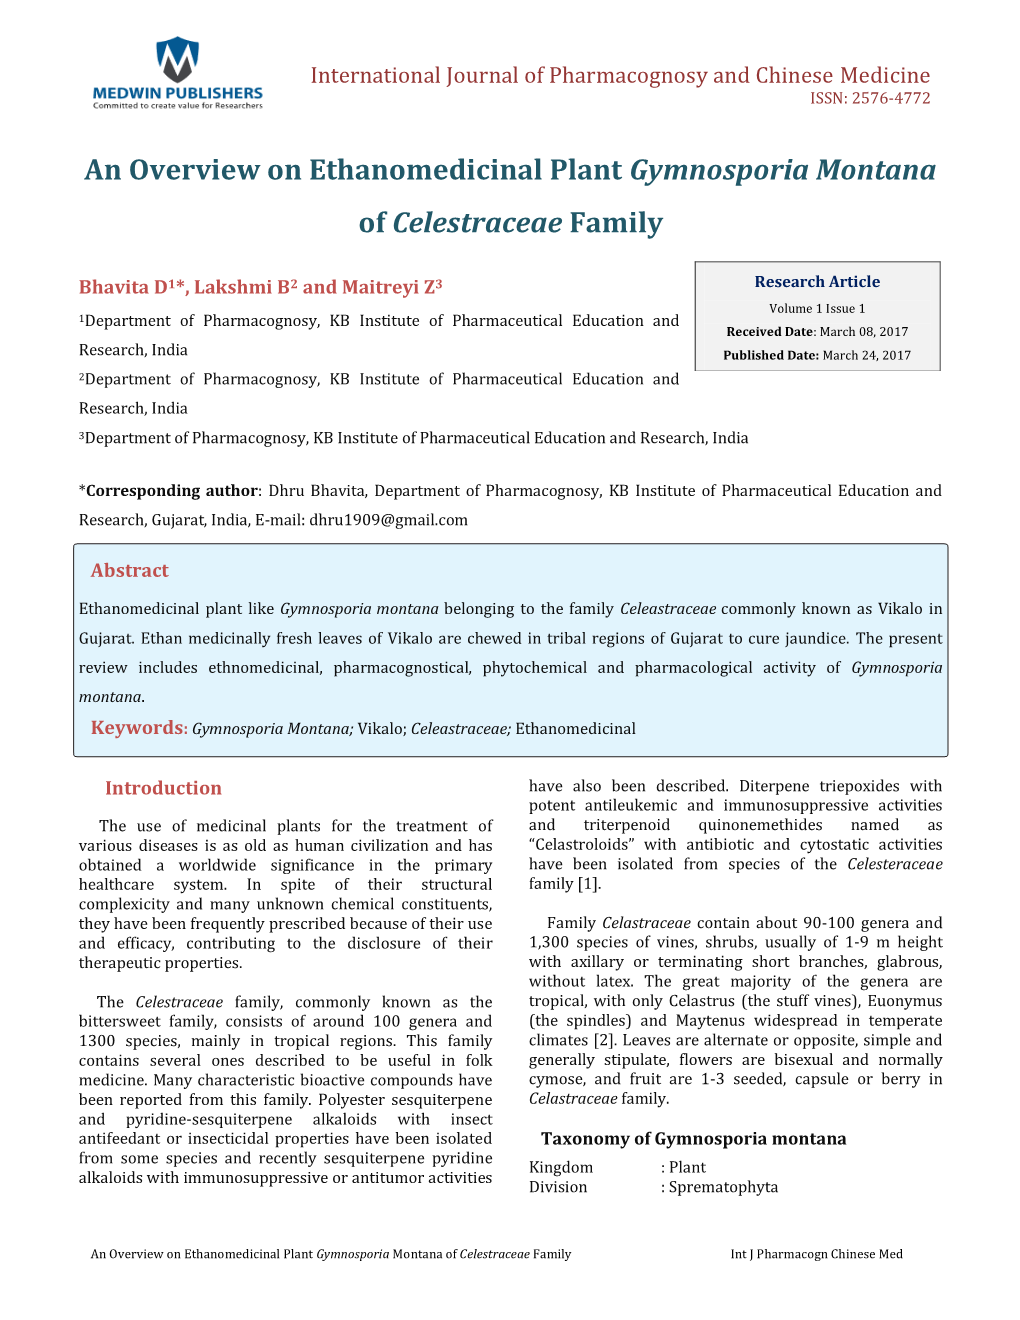 An Overview on Ethanomedicinal Plant Gymnosporia Montana of Celestraceae Family